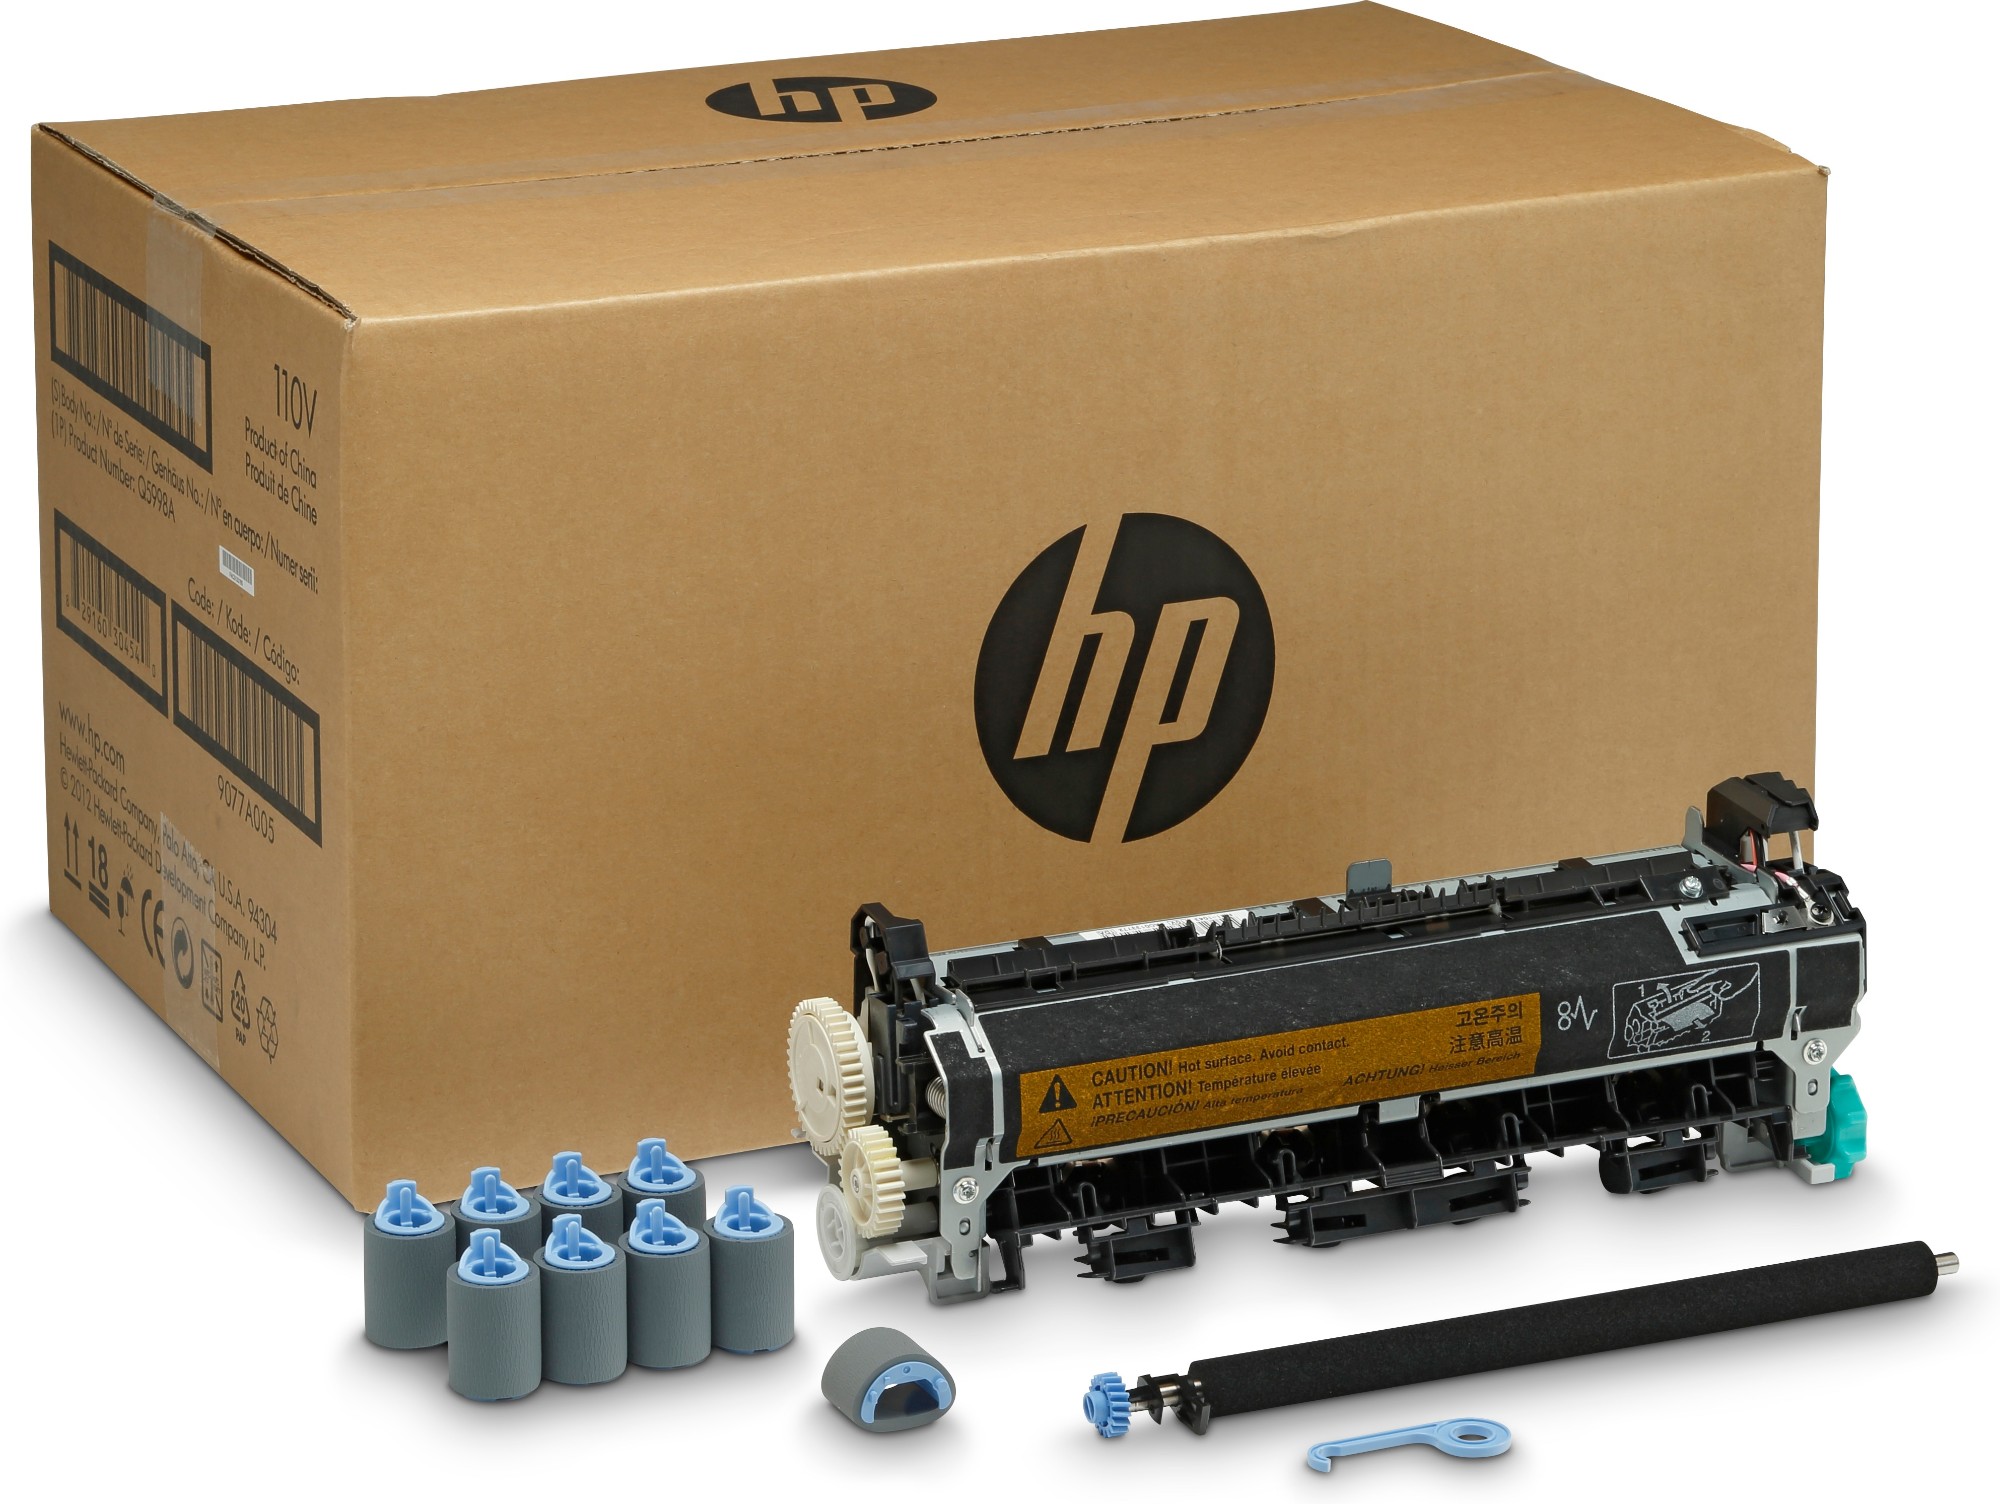 HP Q5999A Maintenance Kit